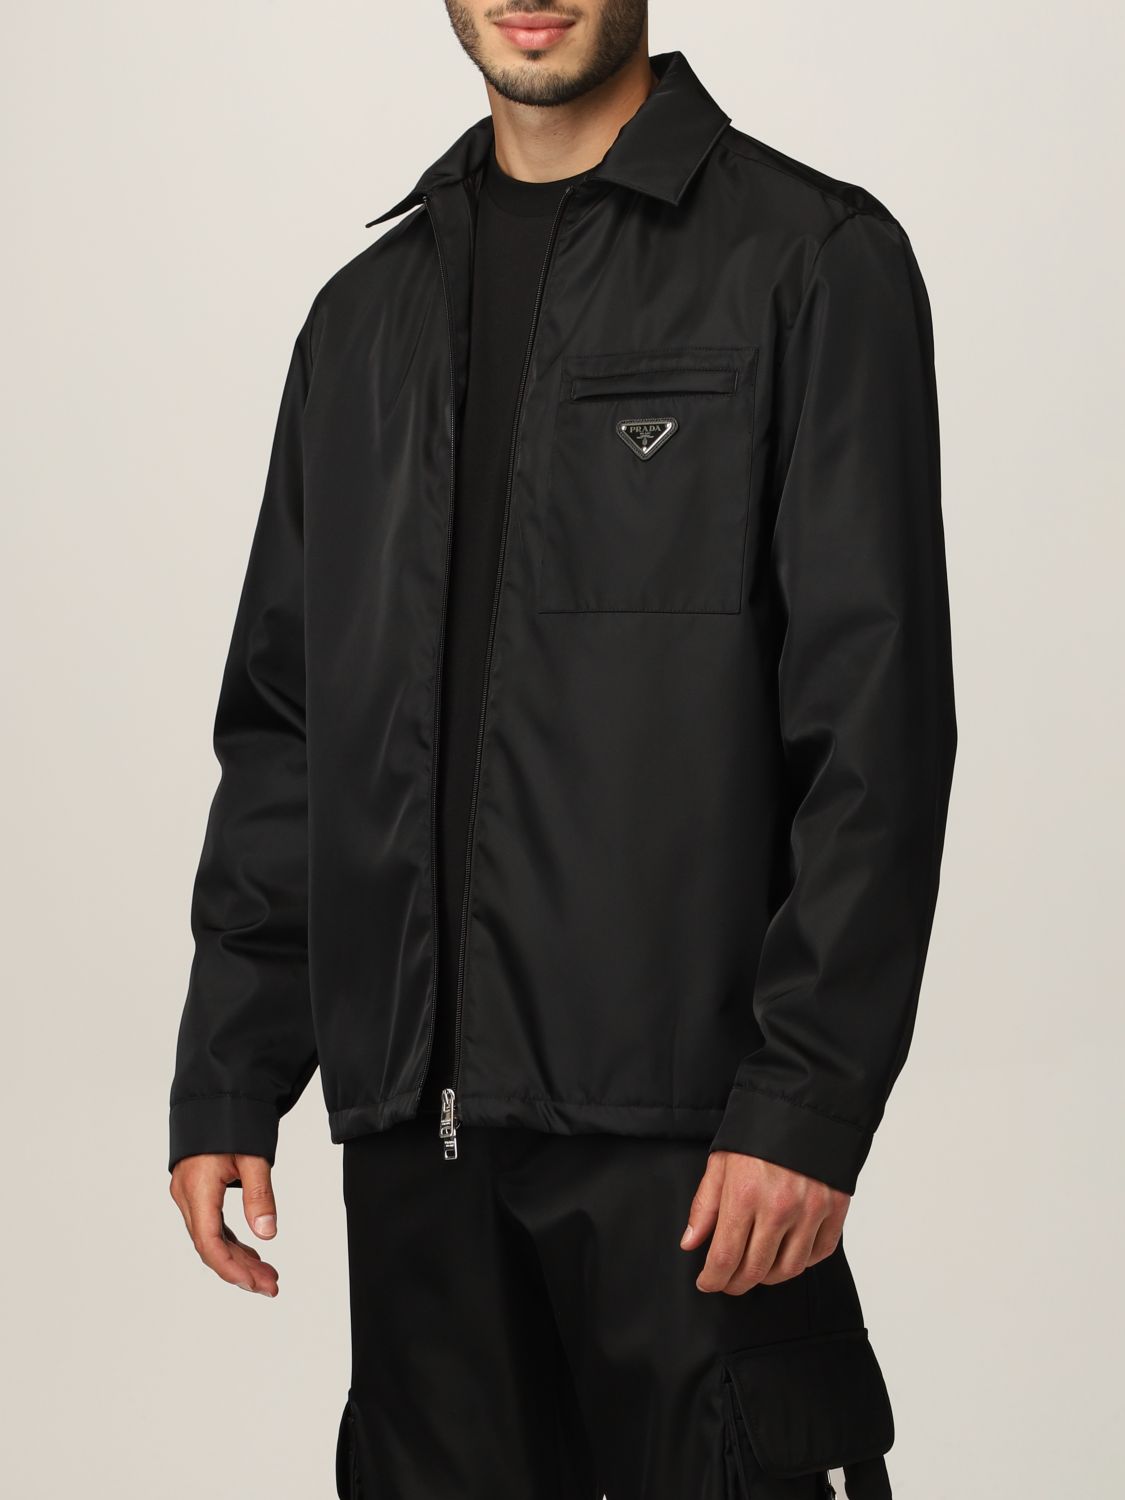 PRADA: jacket in re-nylon with metallic logo - Black | Prada jacket SC510M  1WQ8 online on 